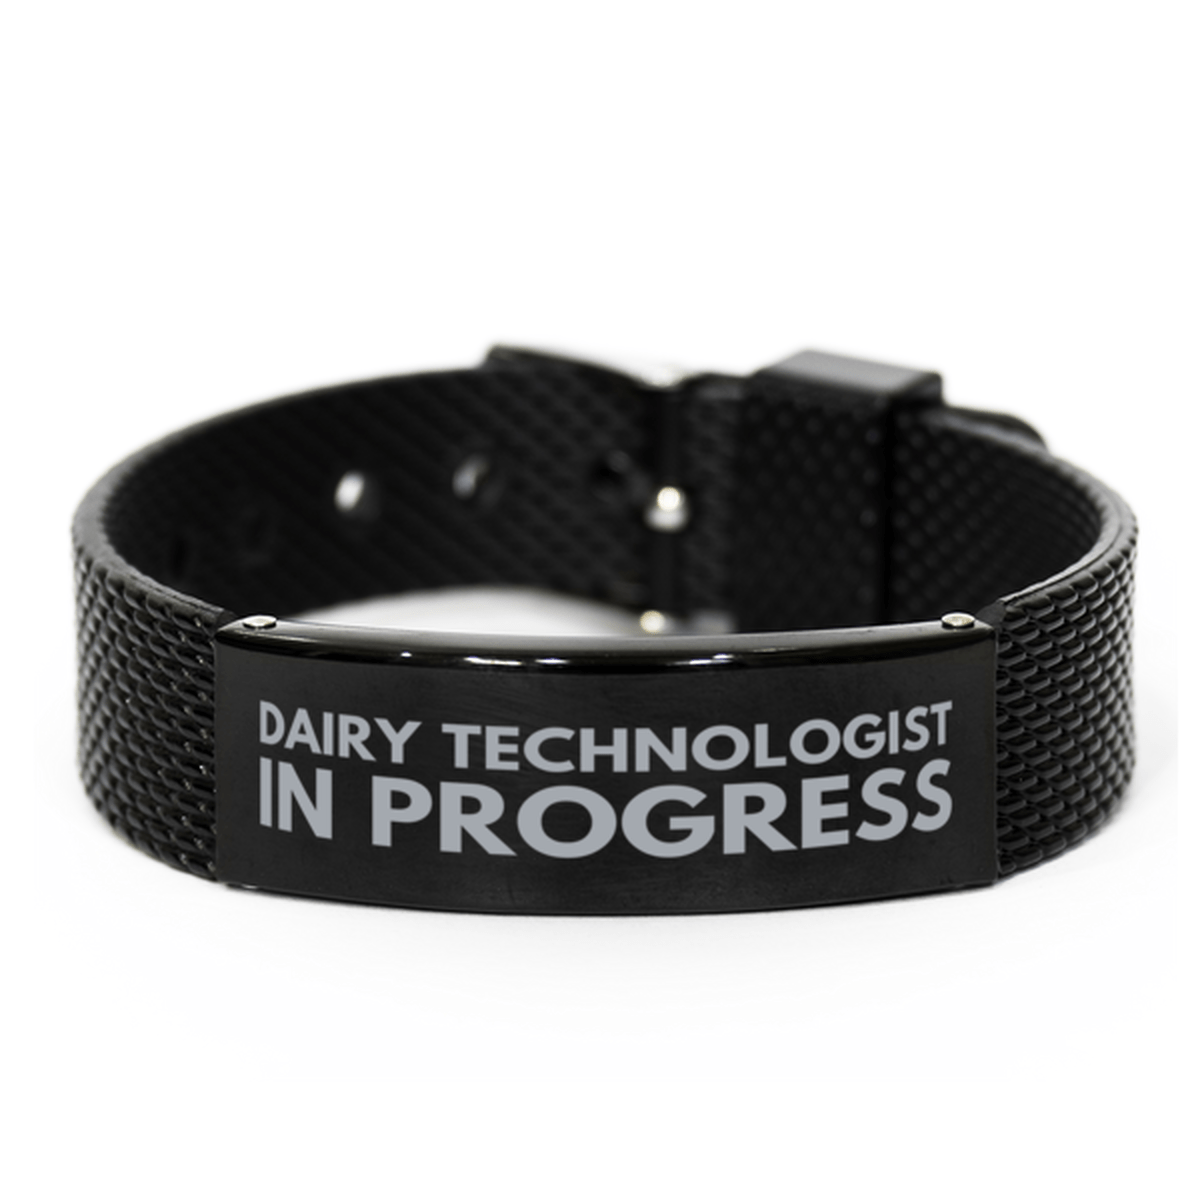 Inspirational Dairy Technologist Black Shark Mesh Bracelet, Dairy Technologist In Progress, Best Graduation Gifts for Students